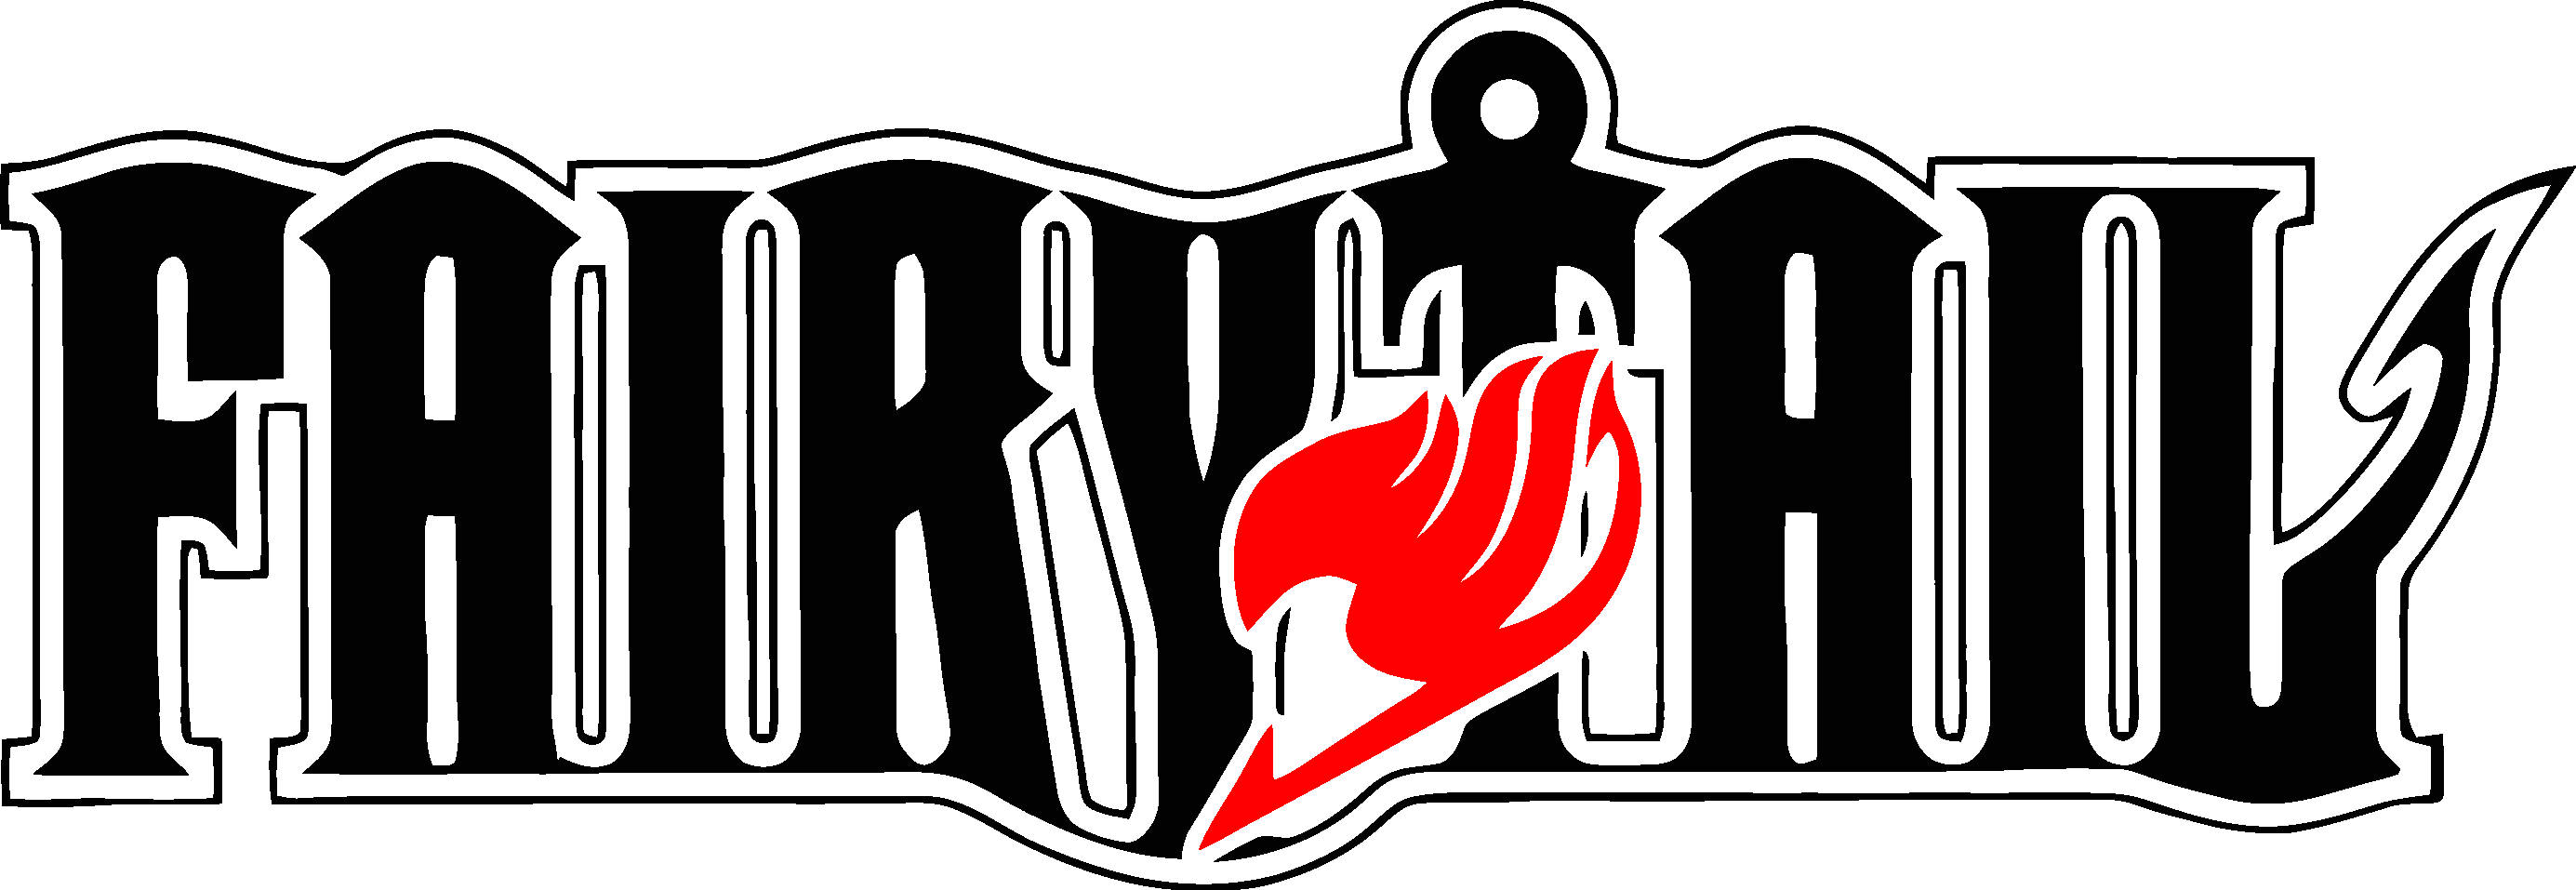 Fairy Tail - Anime Logo [EPS File]